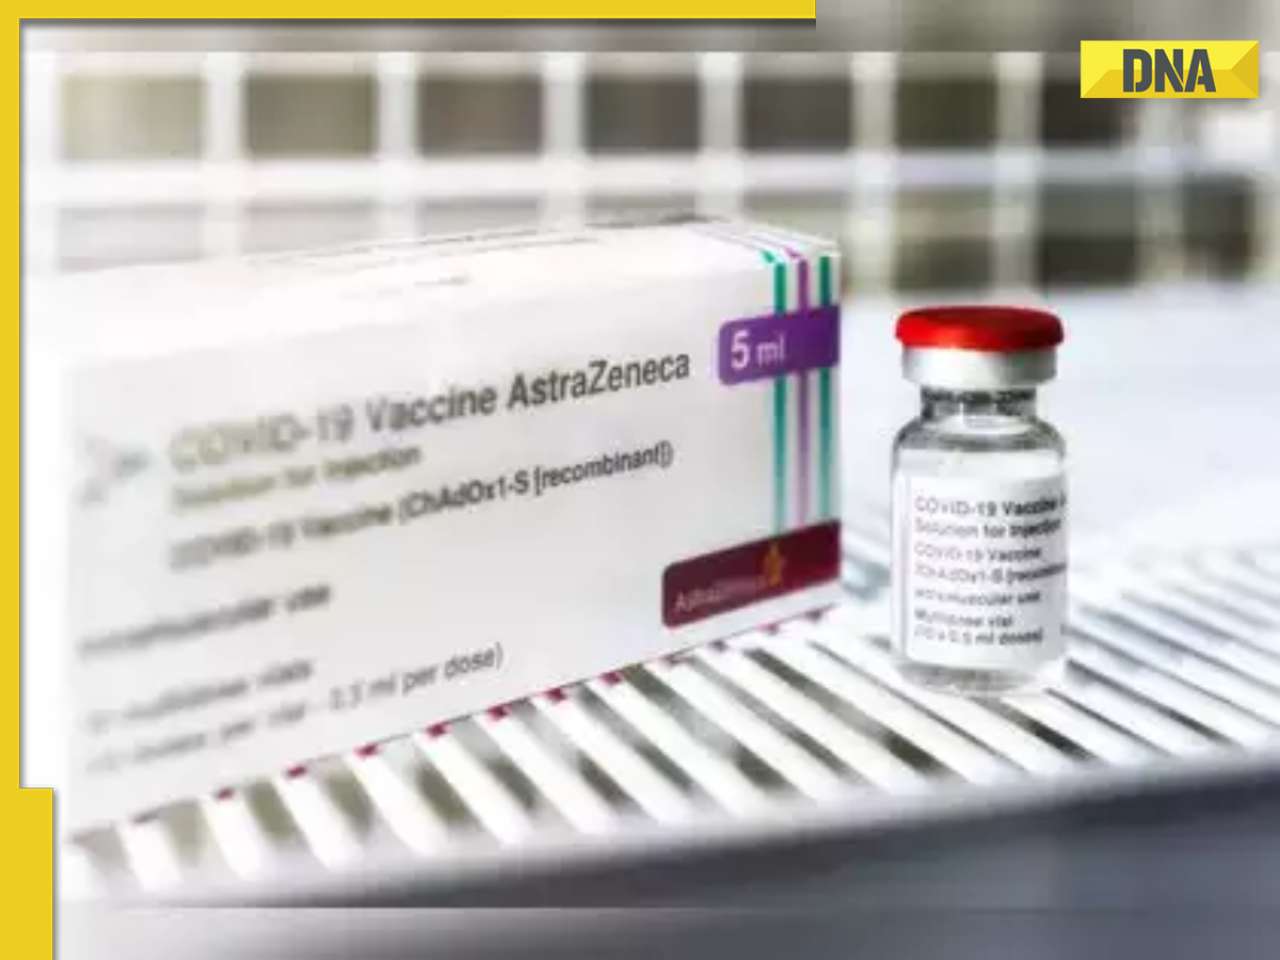 Covishield maker AstraZeneca to withdraw its COVID-19 vaccine globally due to...